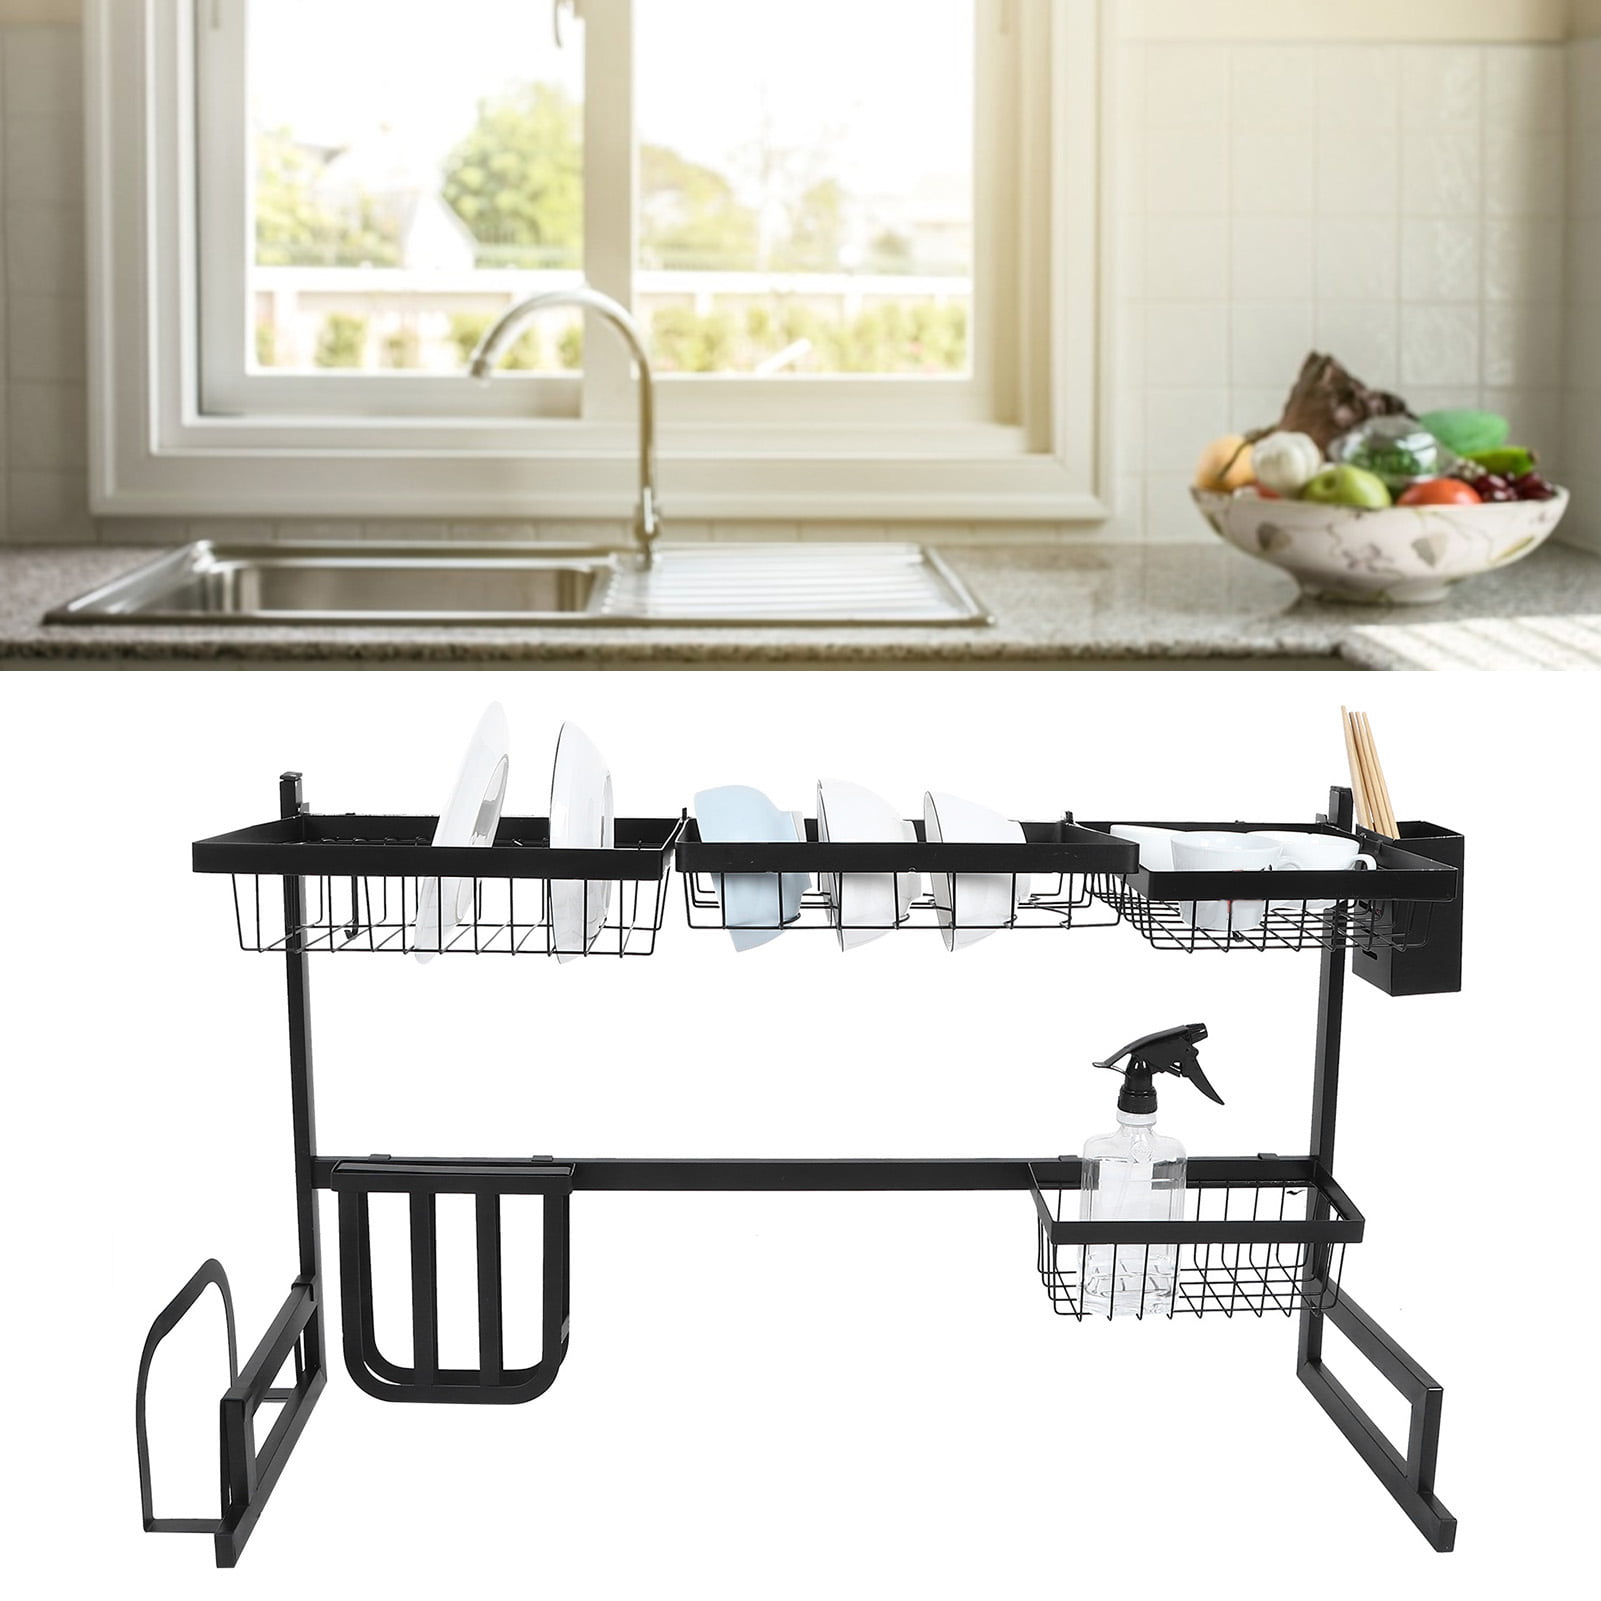 Silver/Gr... Aluminum InterDesign Metro Rustproof  Kitchen Sink Protector Grid 